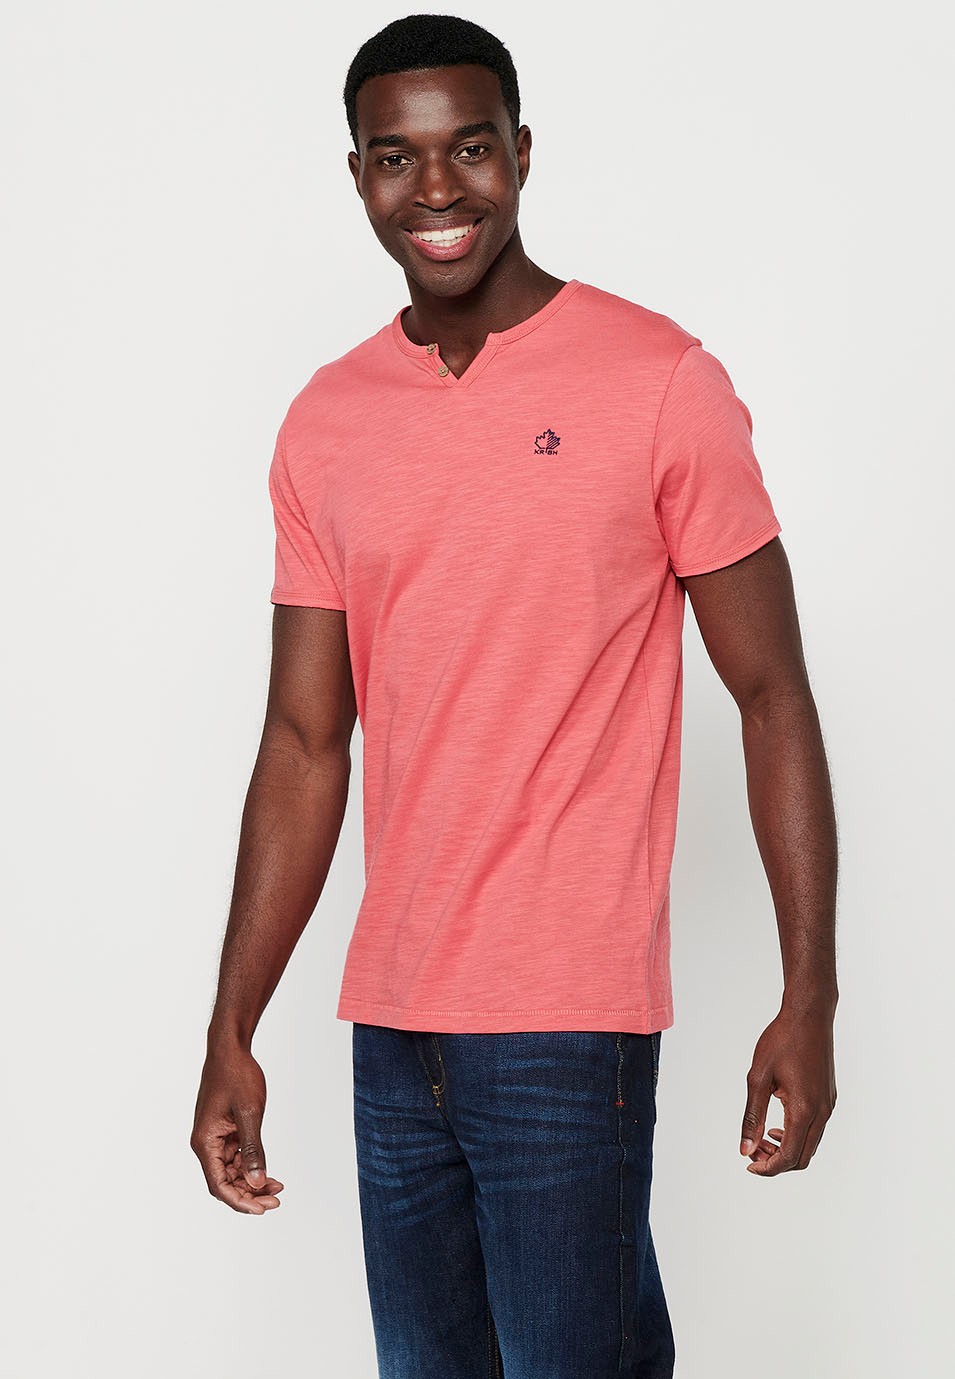 Basic short-sleeved cotton T-shirt, V-neck with button, pink color for men